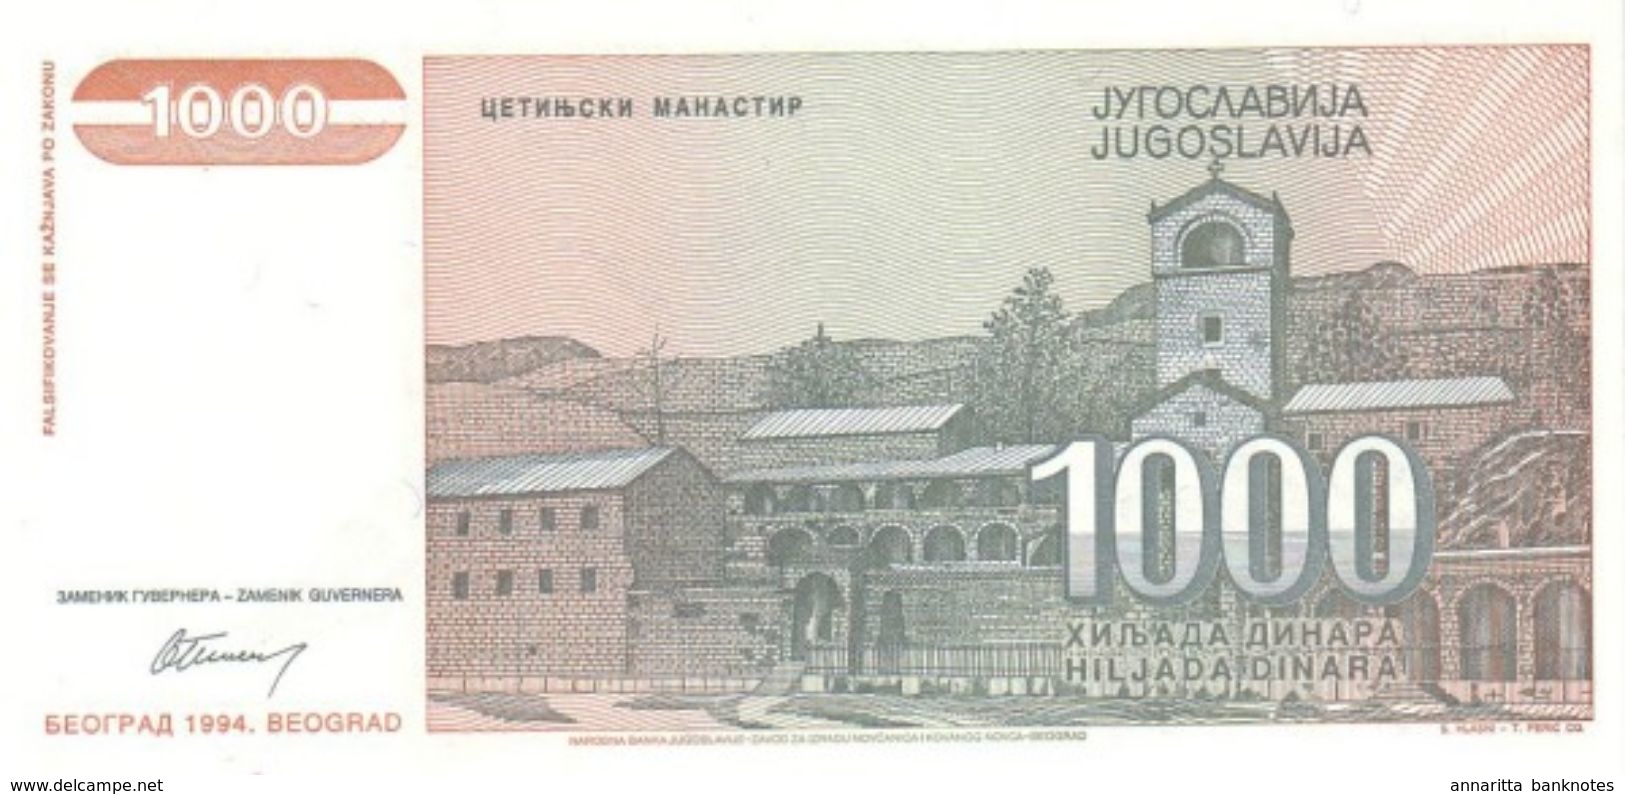 YUGOSLAVIA 1000 DINARA 1994 P-140a UNC  [YU140a] - Yougoslavie